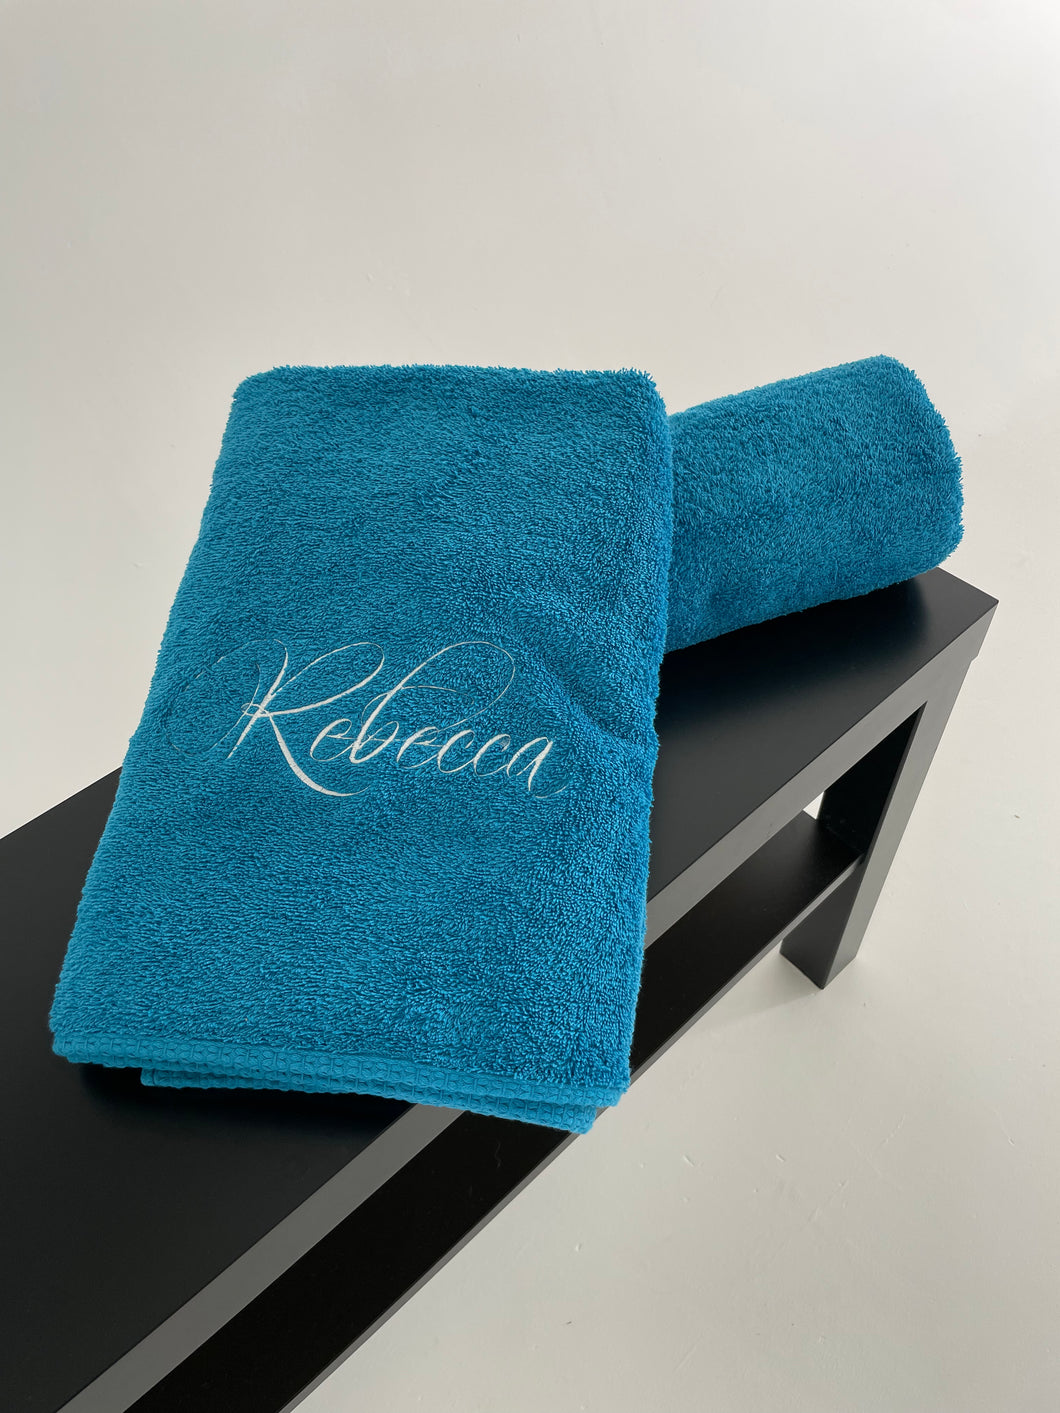 Bath towel set with custom name